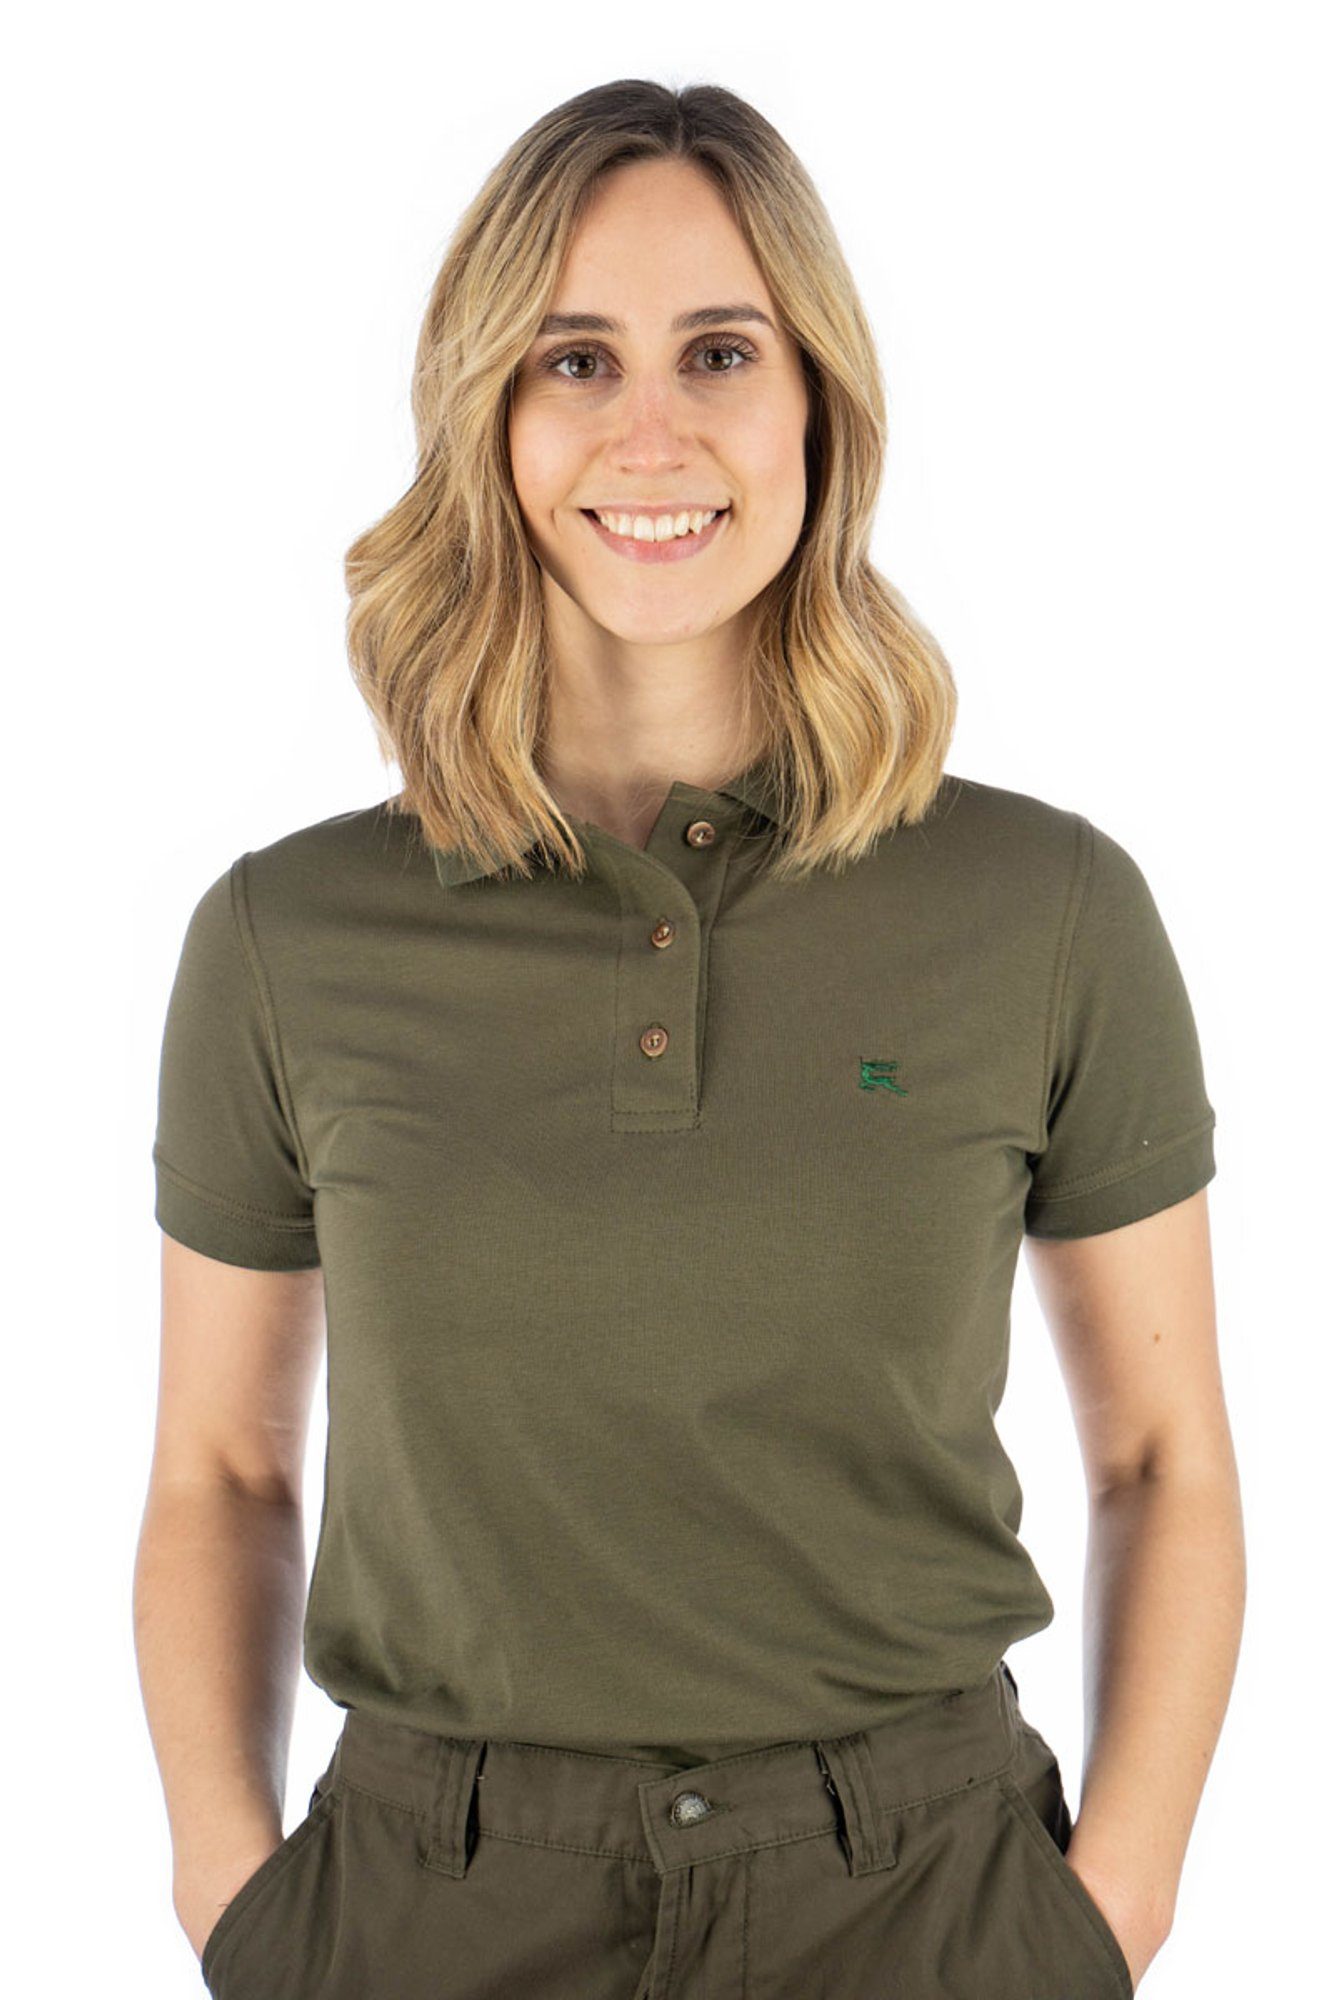 Brust OS-Trachten oliv auf Laukas der Shirt mit Poloshirt Kurzarm linken Hirsch-Stickerei